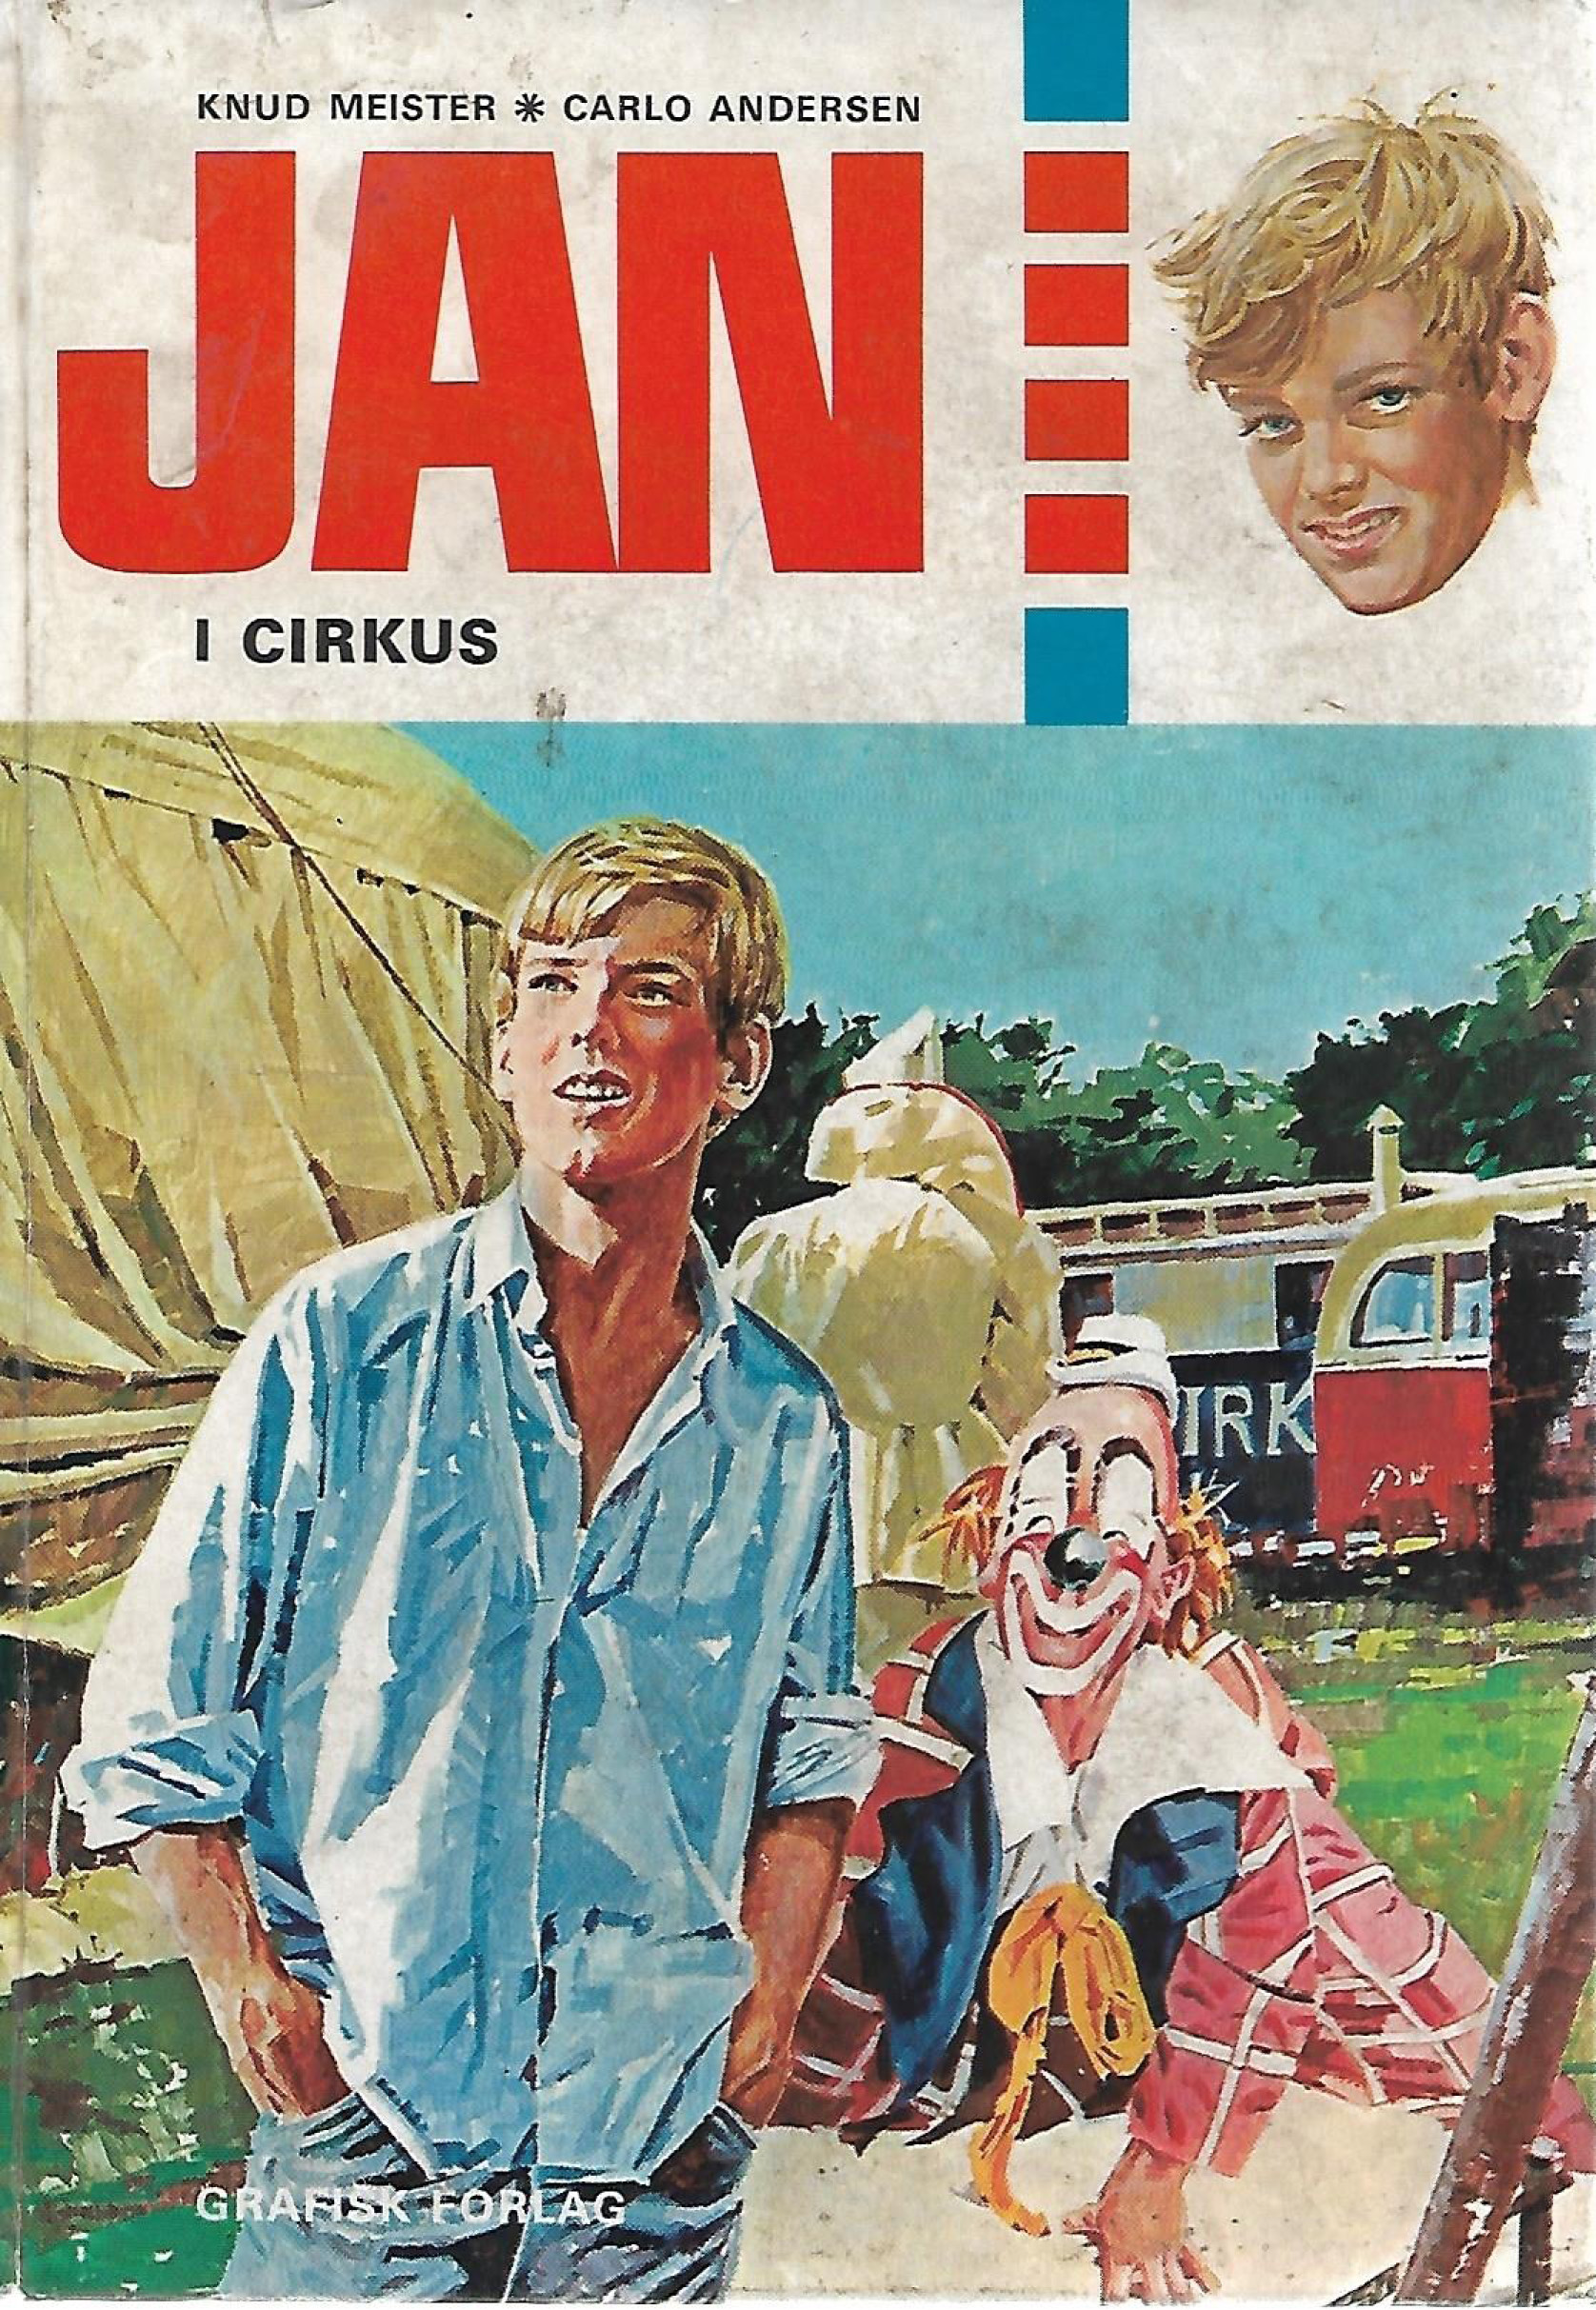 Jan i cirkus - Knud Meister og Carlo Andersen-1